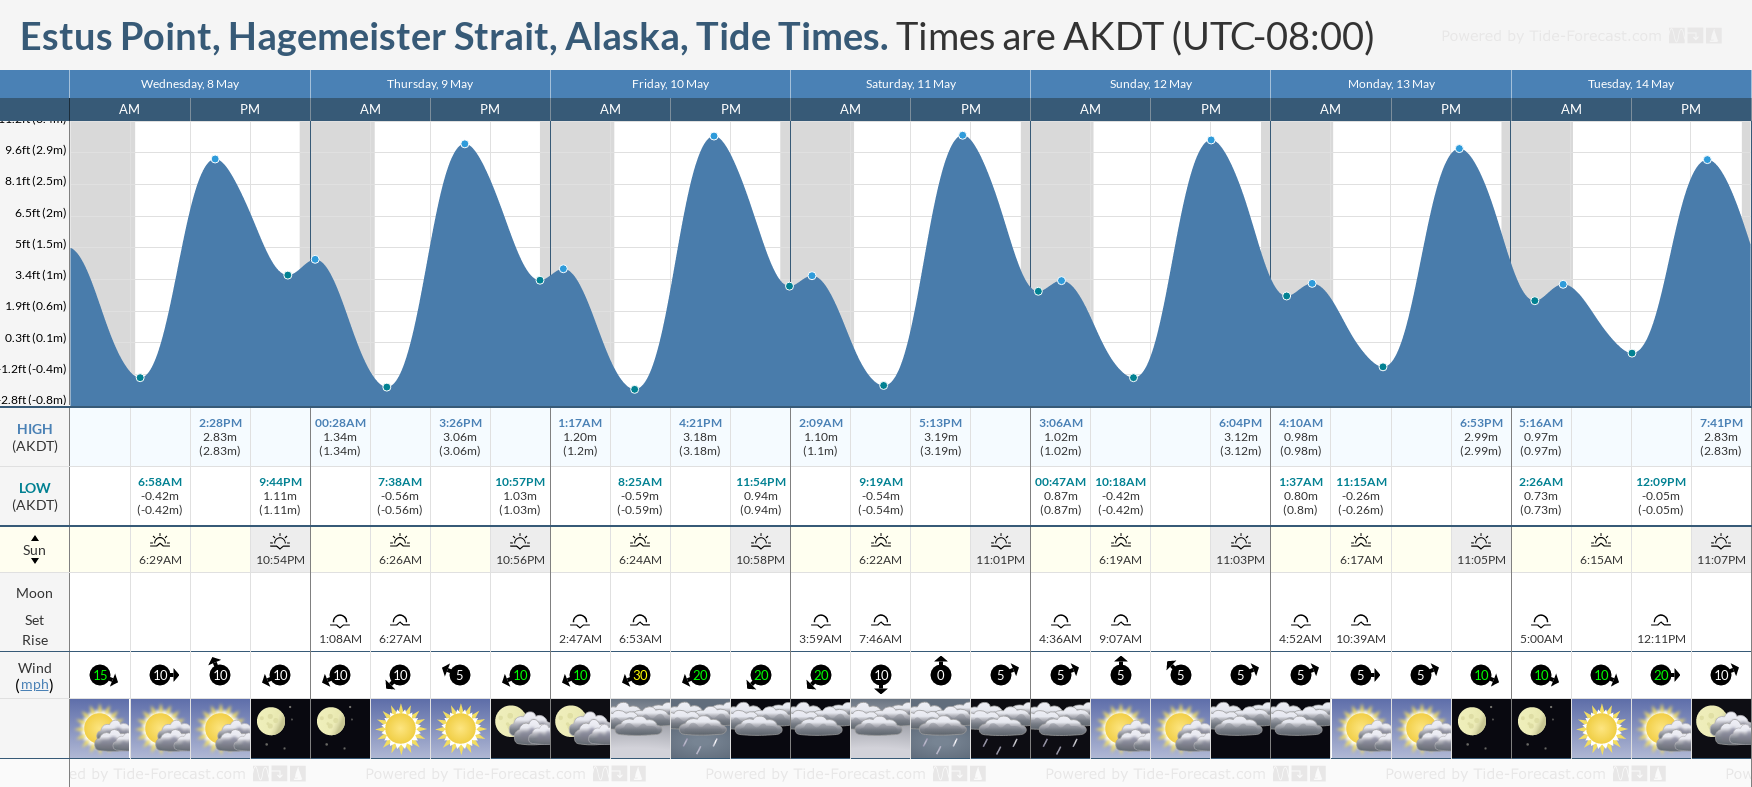 Estus Point, Hagemeister Strait, Alaska Tide Chart including high and low tide tide times for the next 7 days